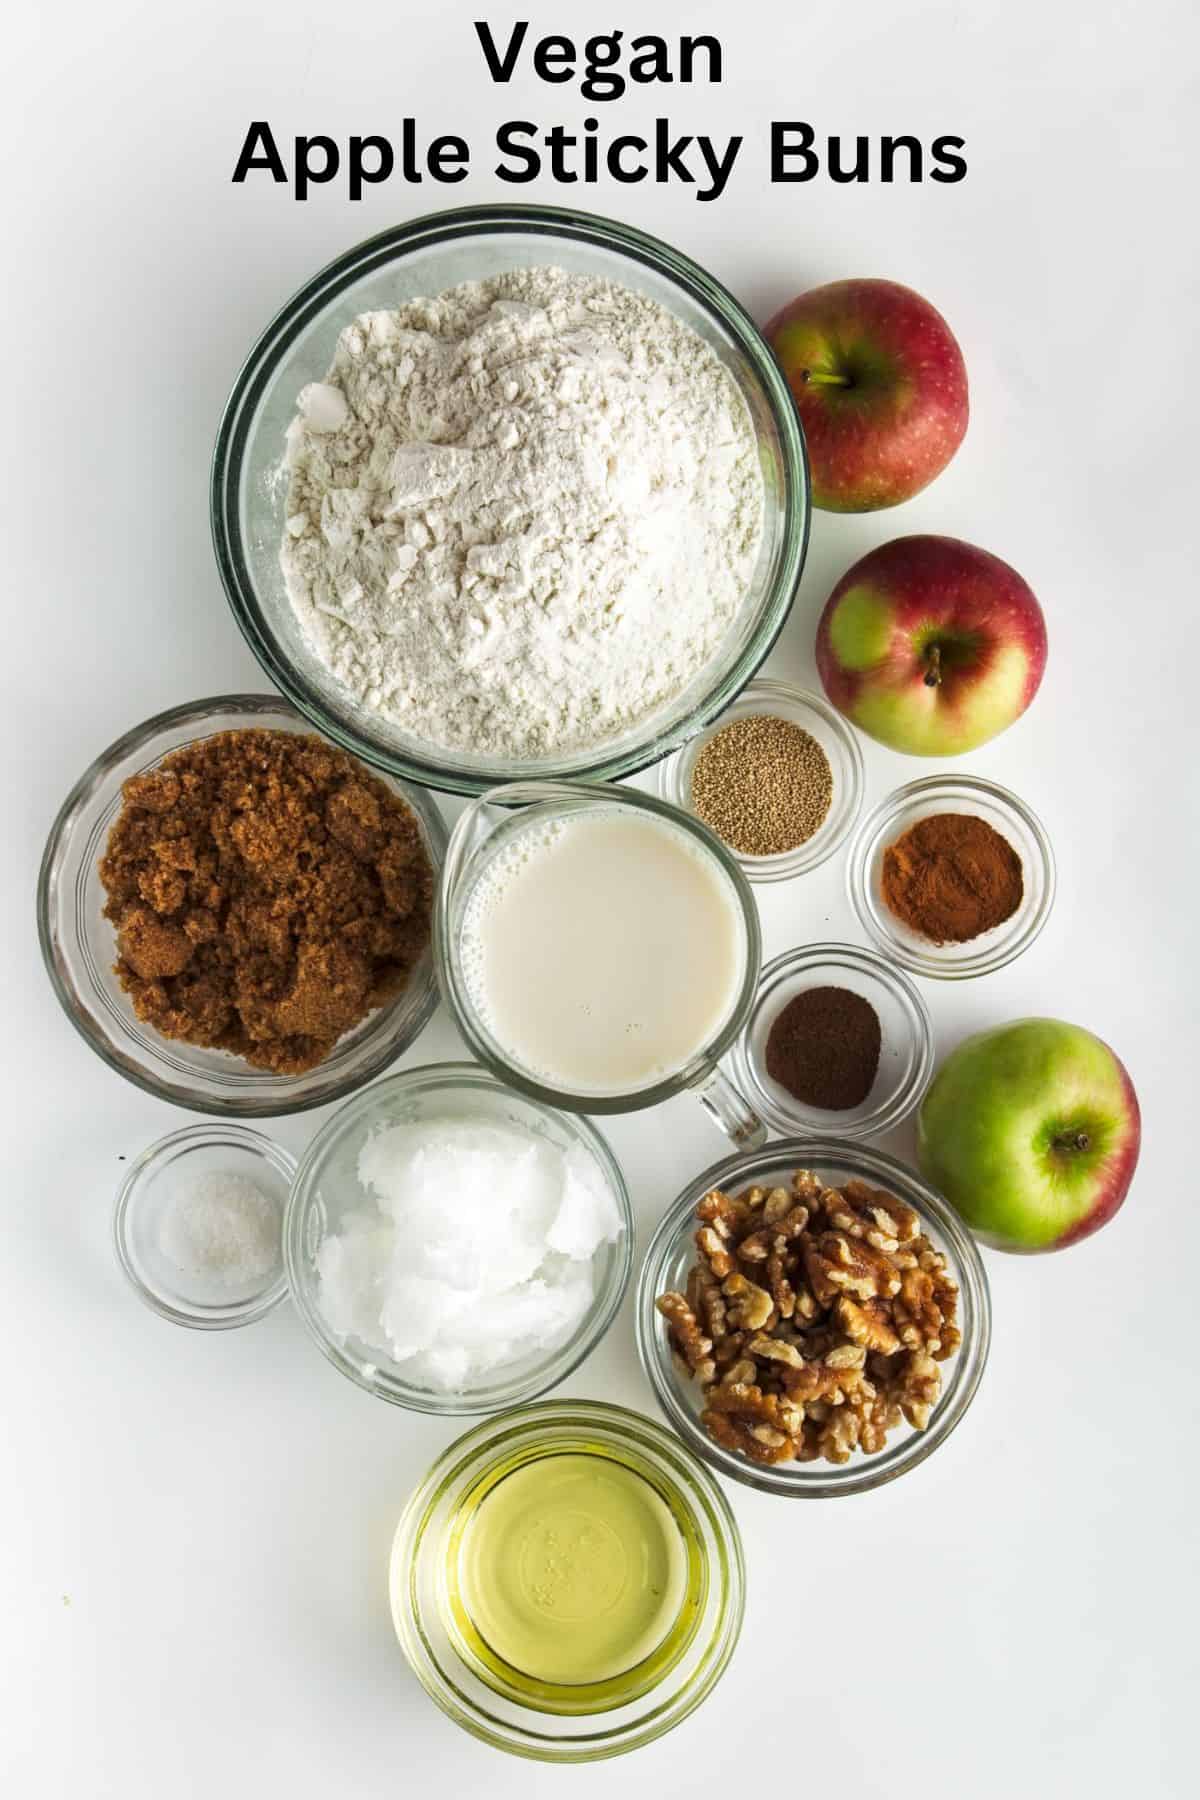 Ingredients for vegan apple sticky buns